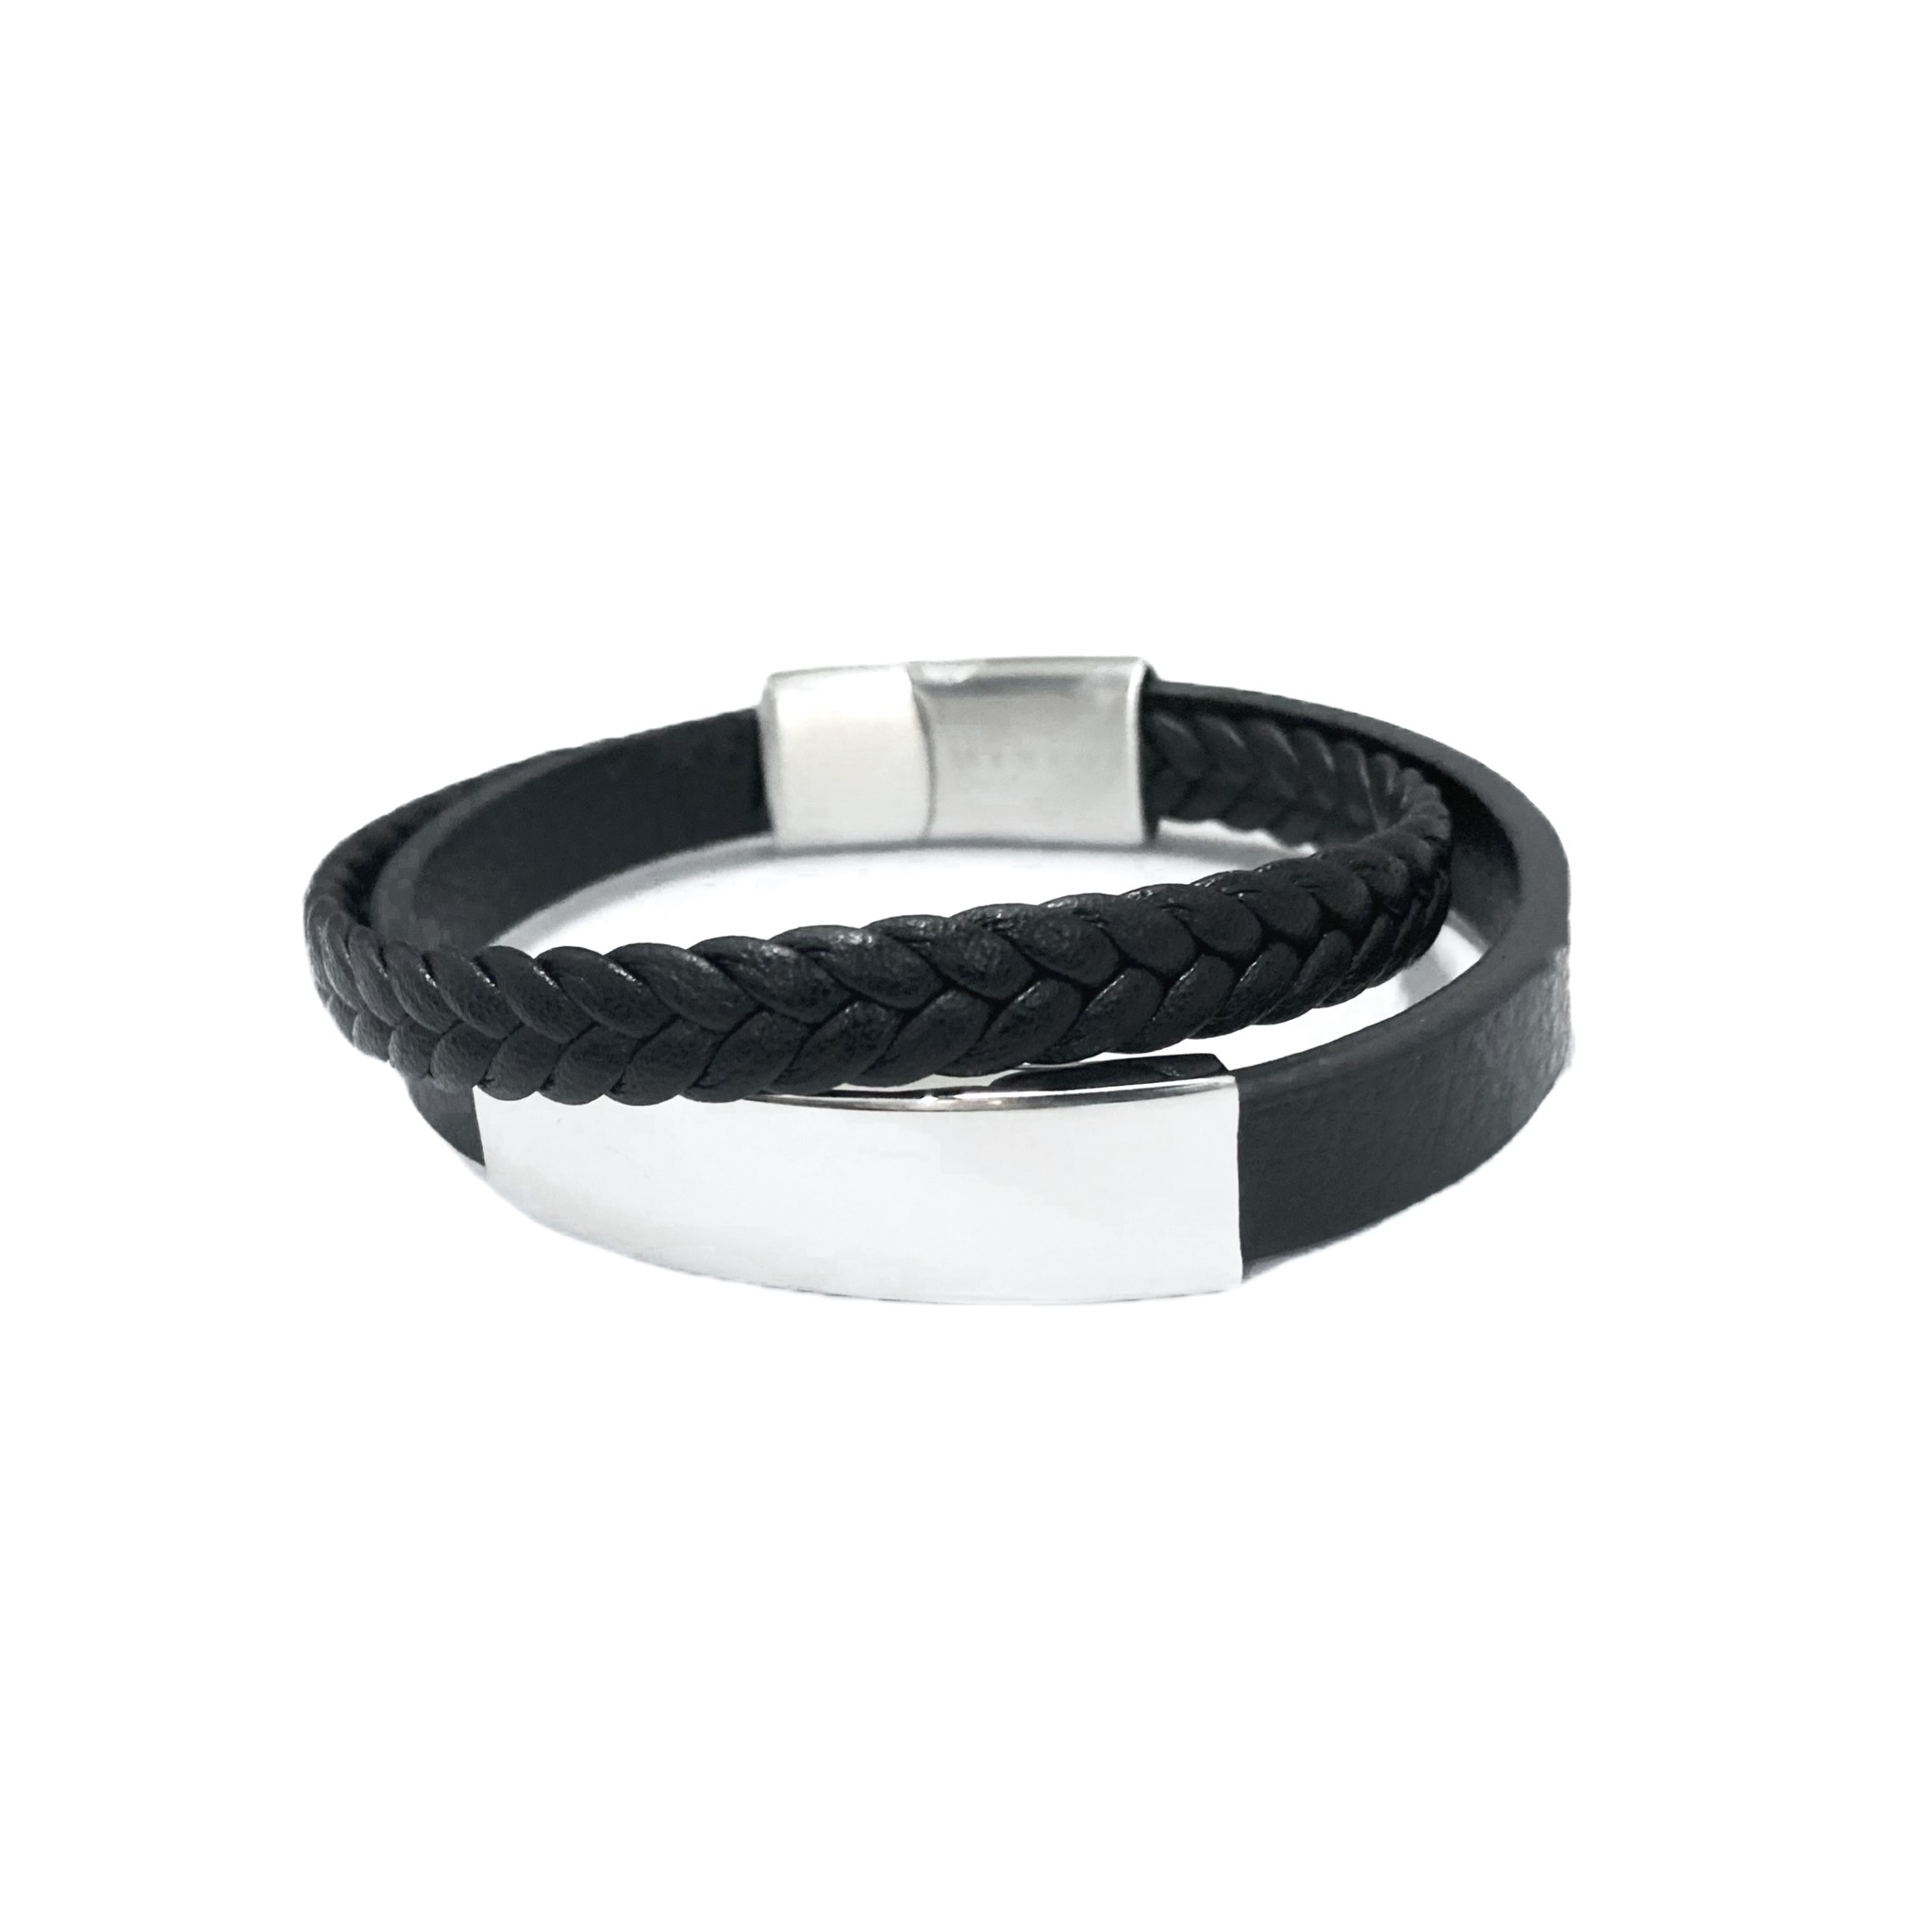 William Stainless Steel Leather Bracelet